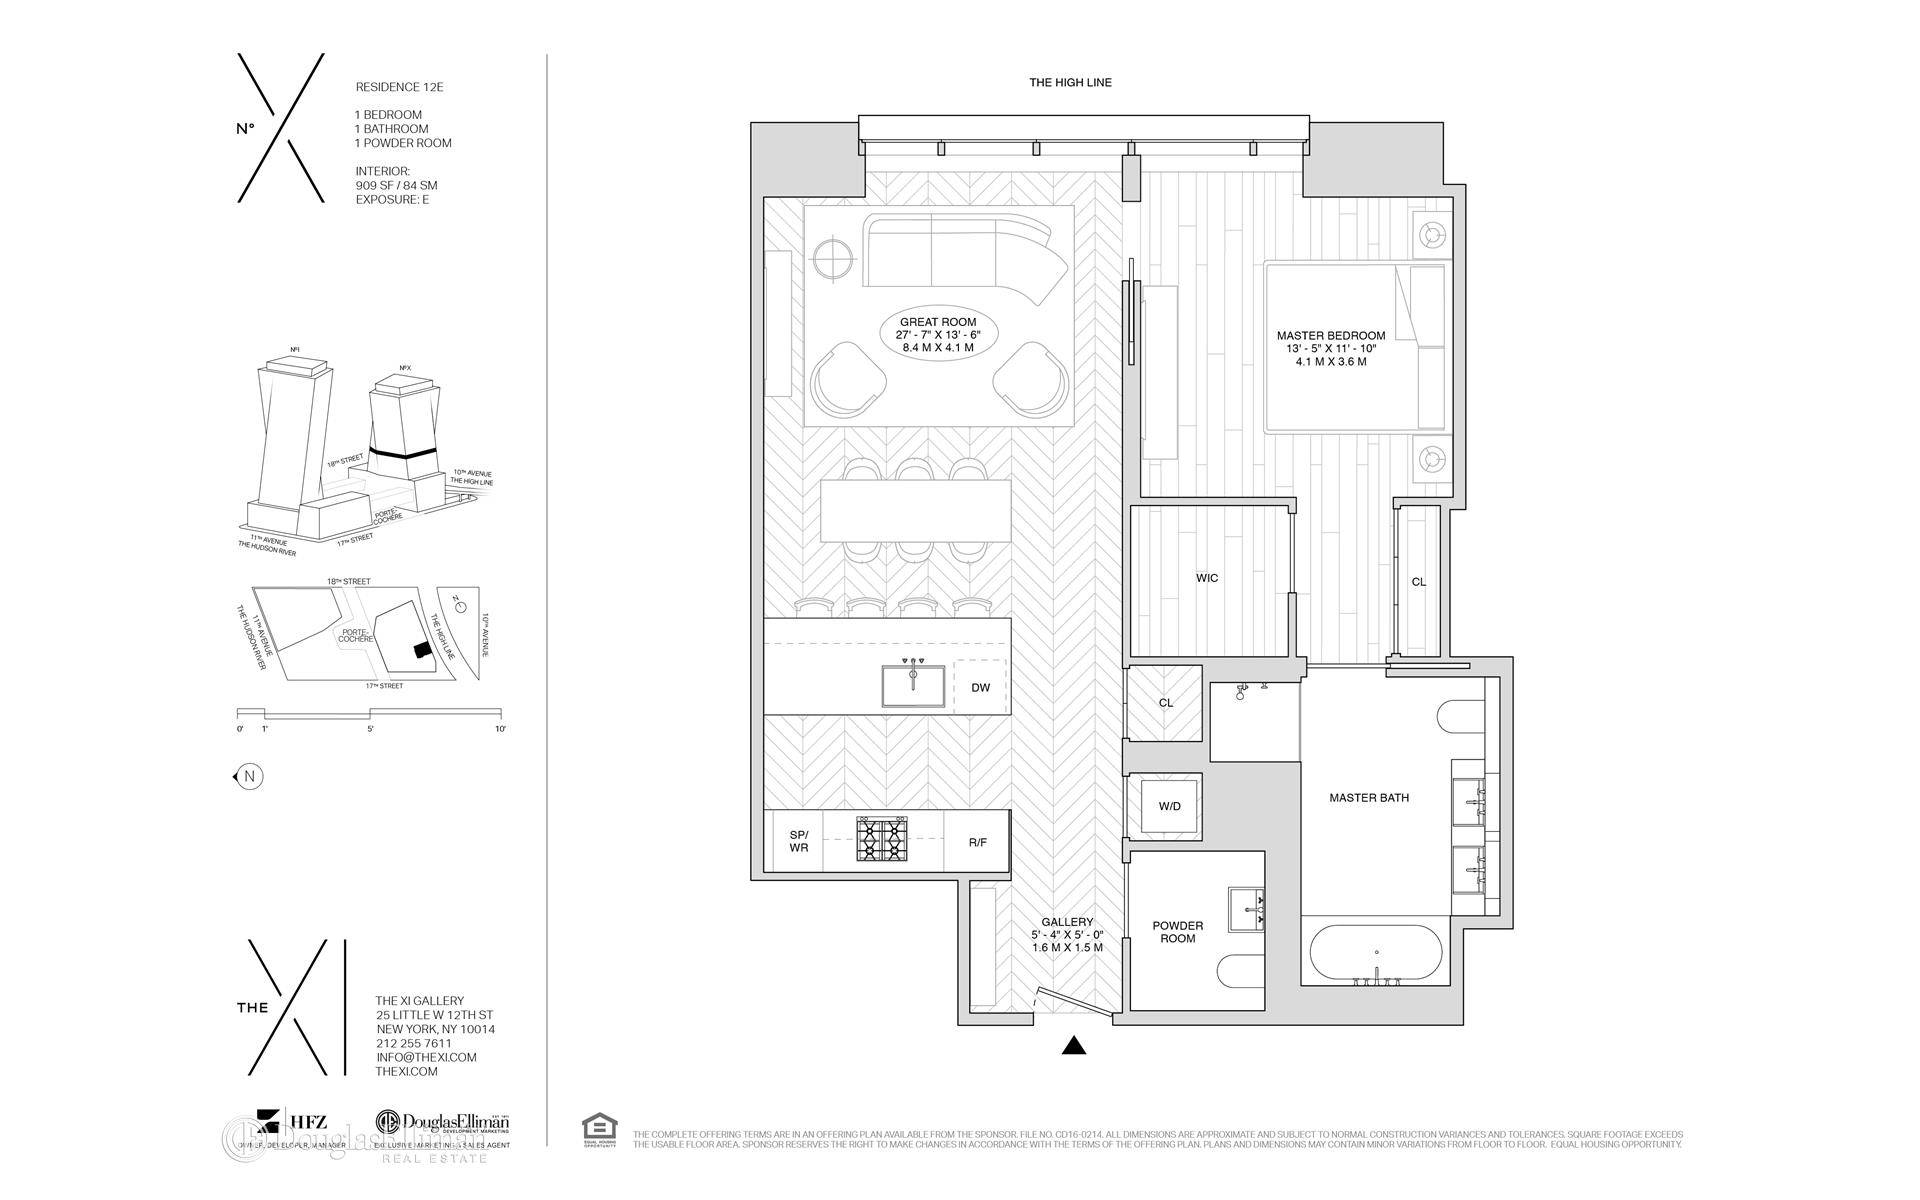 Residence 12E is a premier one bedroom home designed by Gilles et Boissier at No.